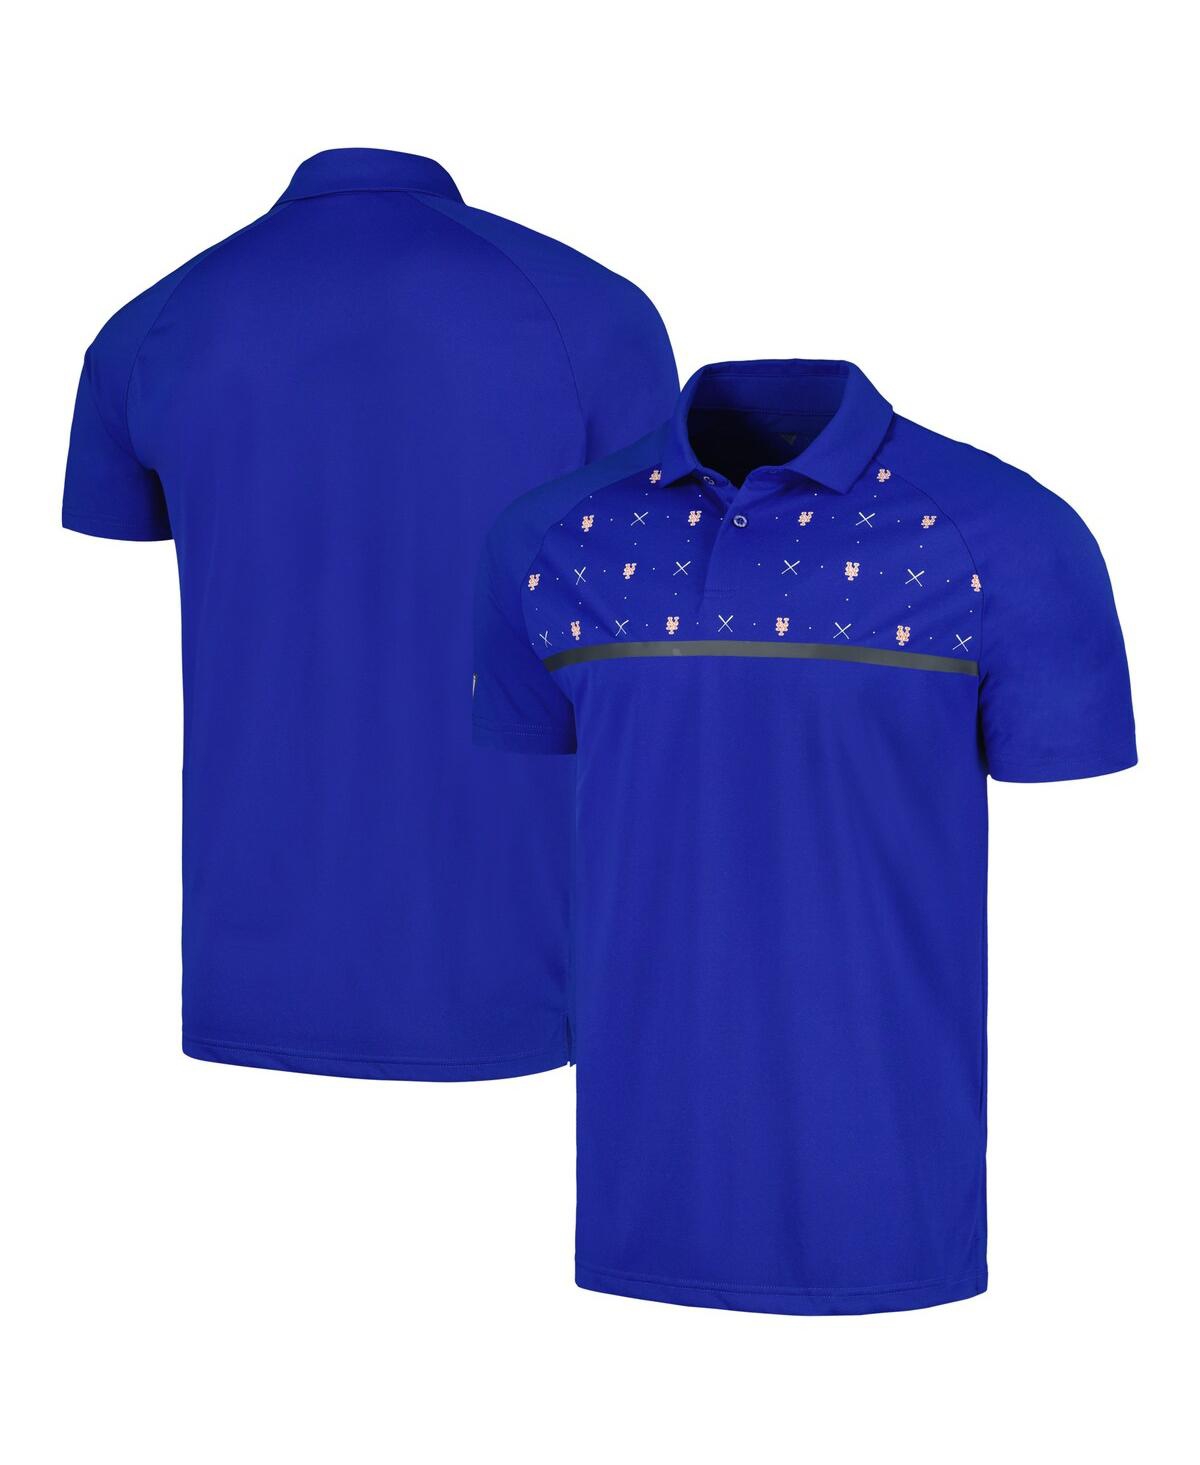 Shop Levelwear Men's  Royal New York Mets Sector Batter Up Raglan Polo Shirt